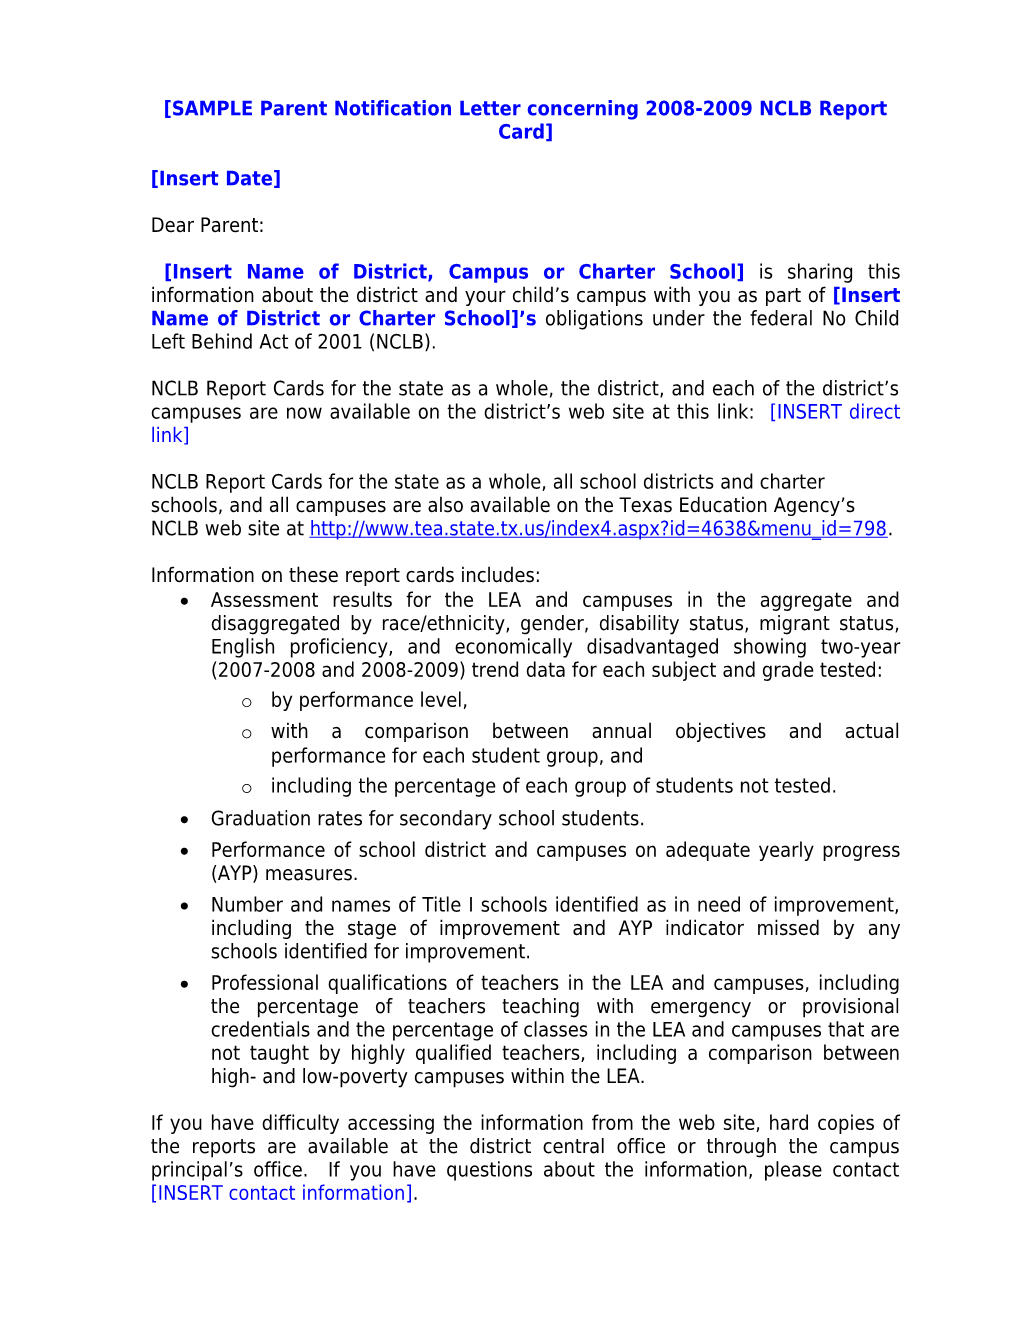 SAMPLE Parent Notification Letter Concerning 2007-2008 NCLB Report Card